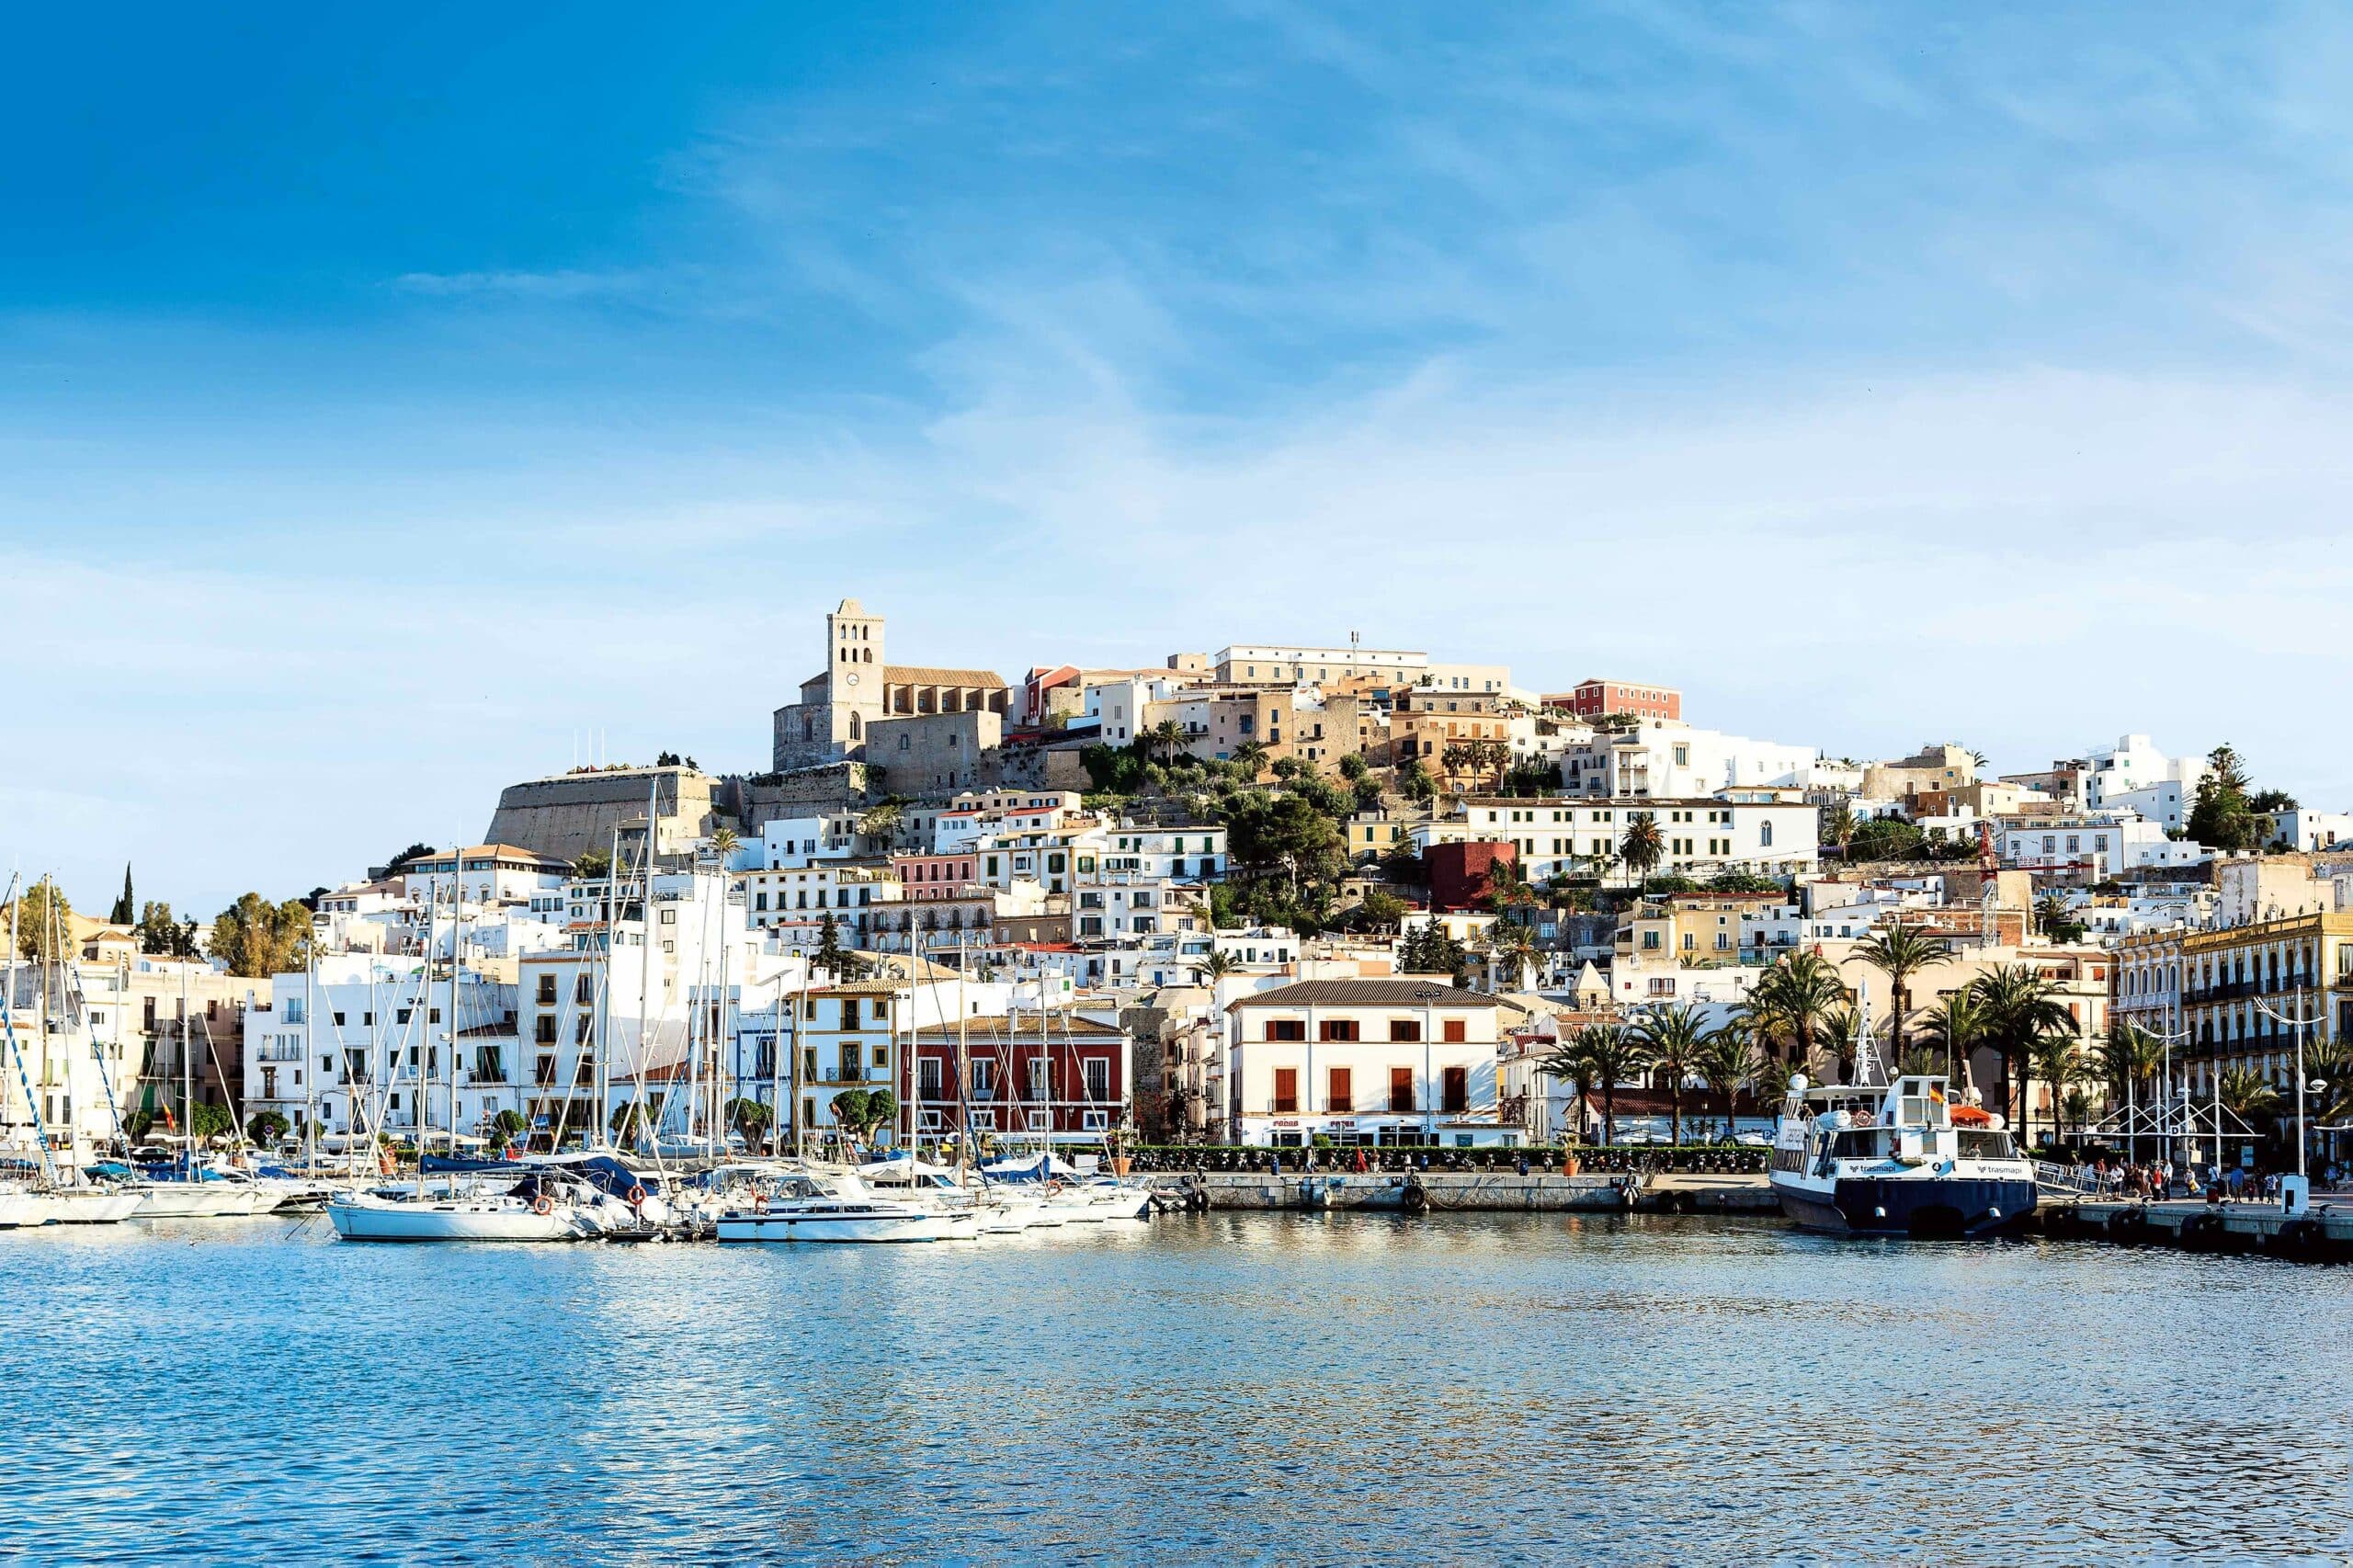 Usurpación de viviendas por okupas en Ibiza - Confilegal